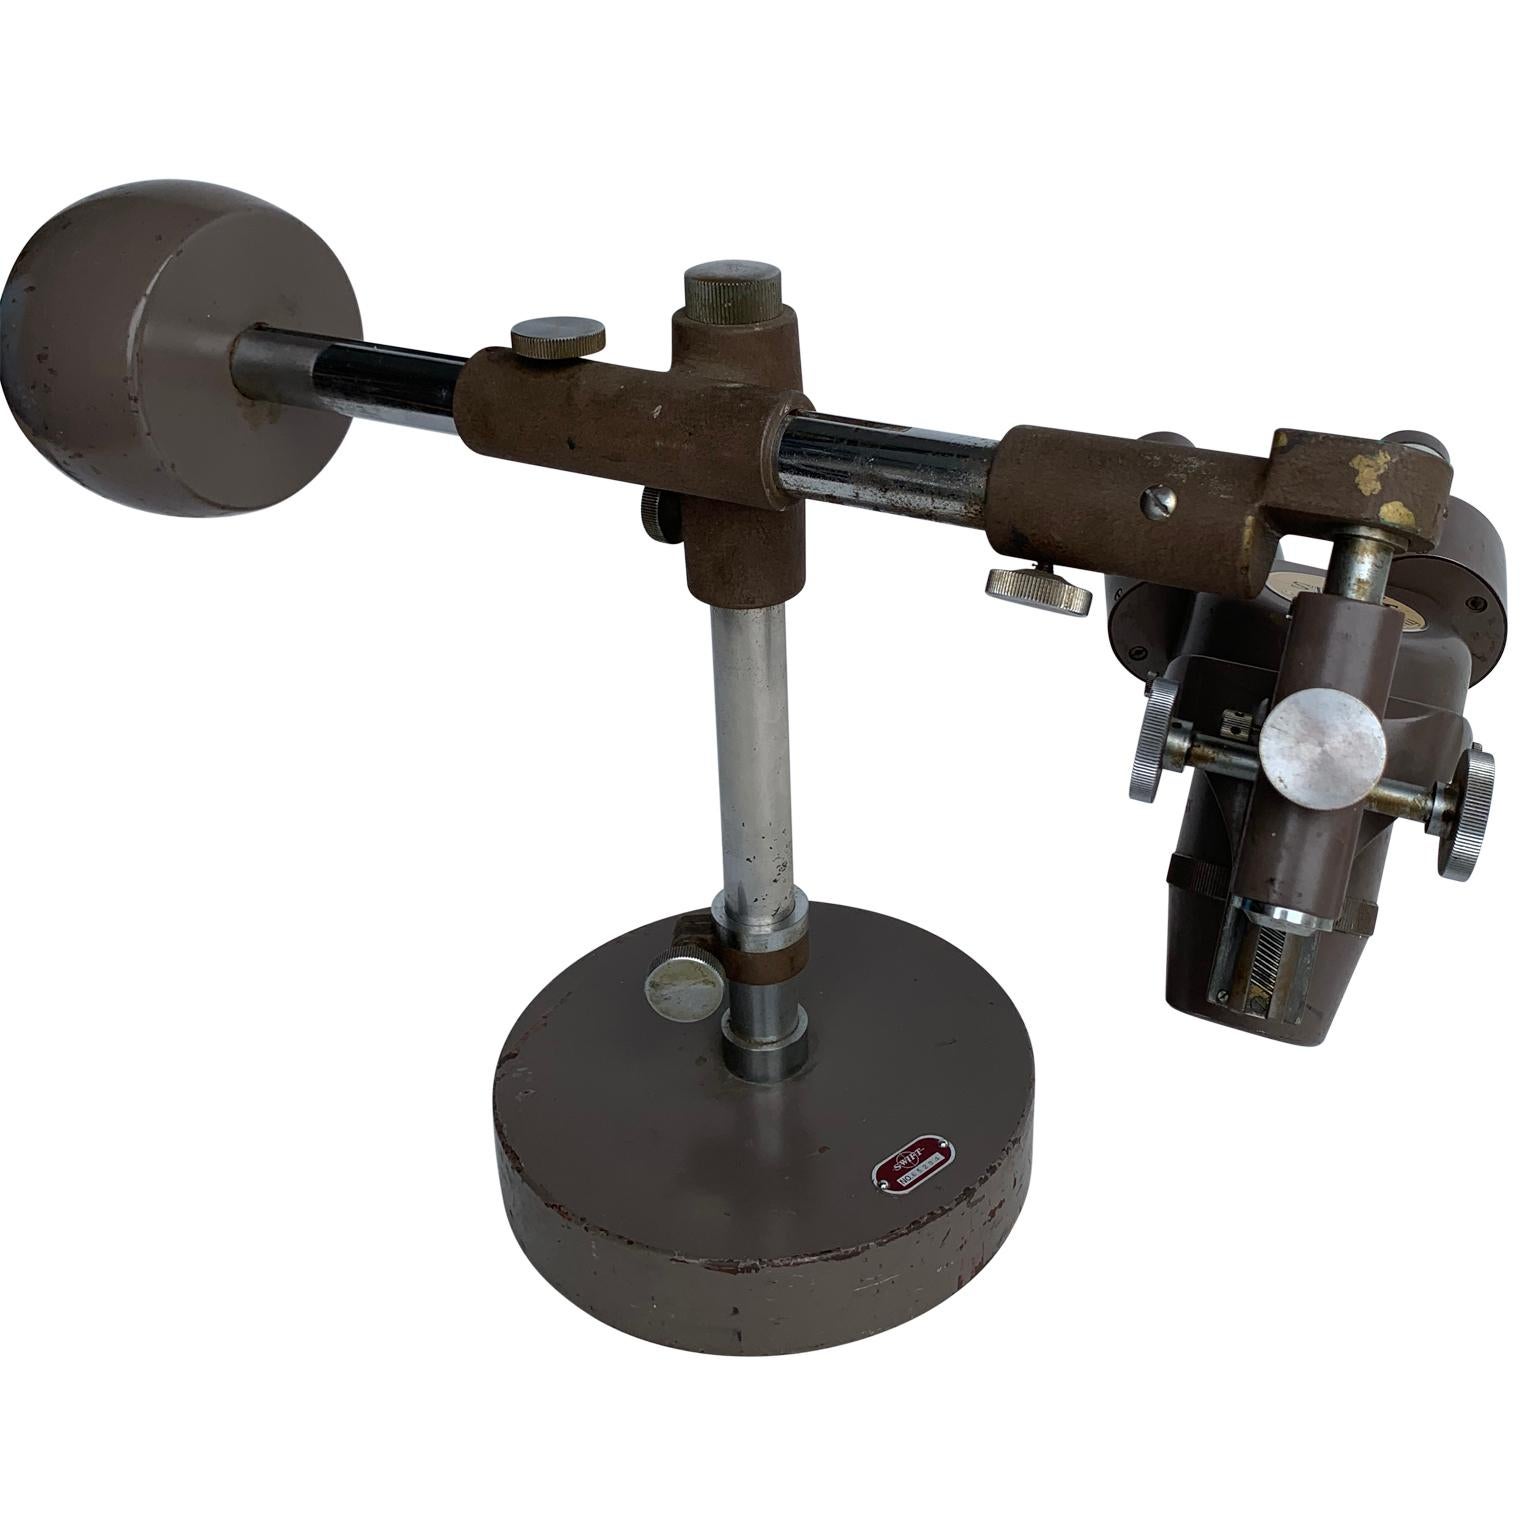 Seltenes japanisches „SWIFT“  Stereo Mikroskop von Stereo Ninety (20. Jahrhundert)